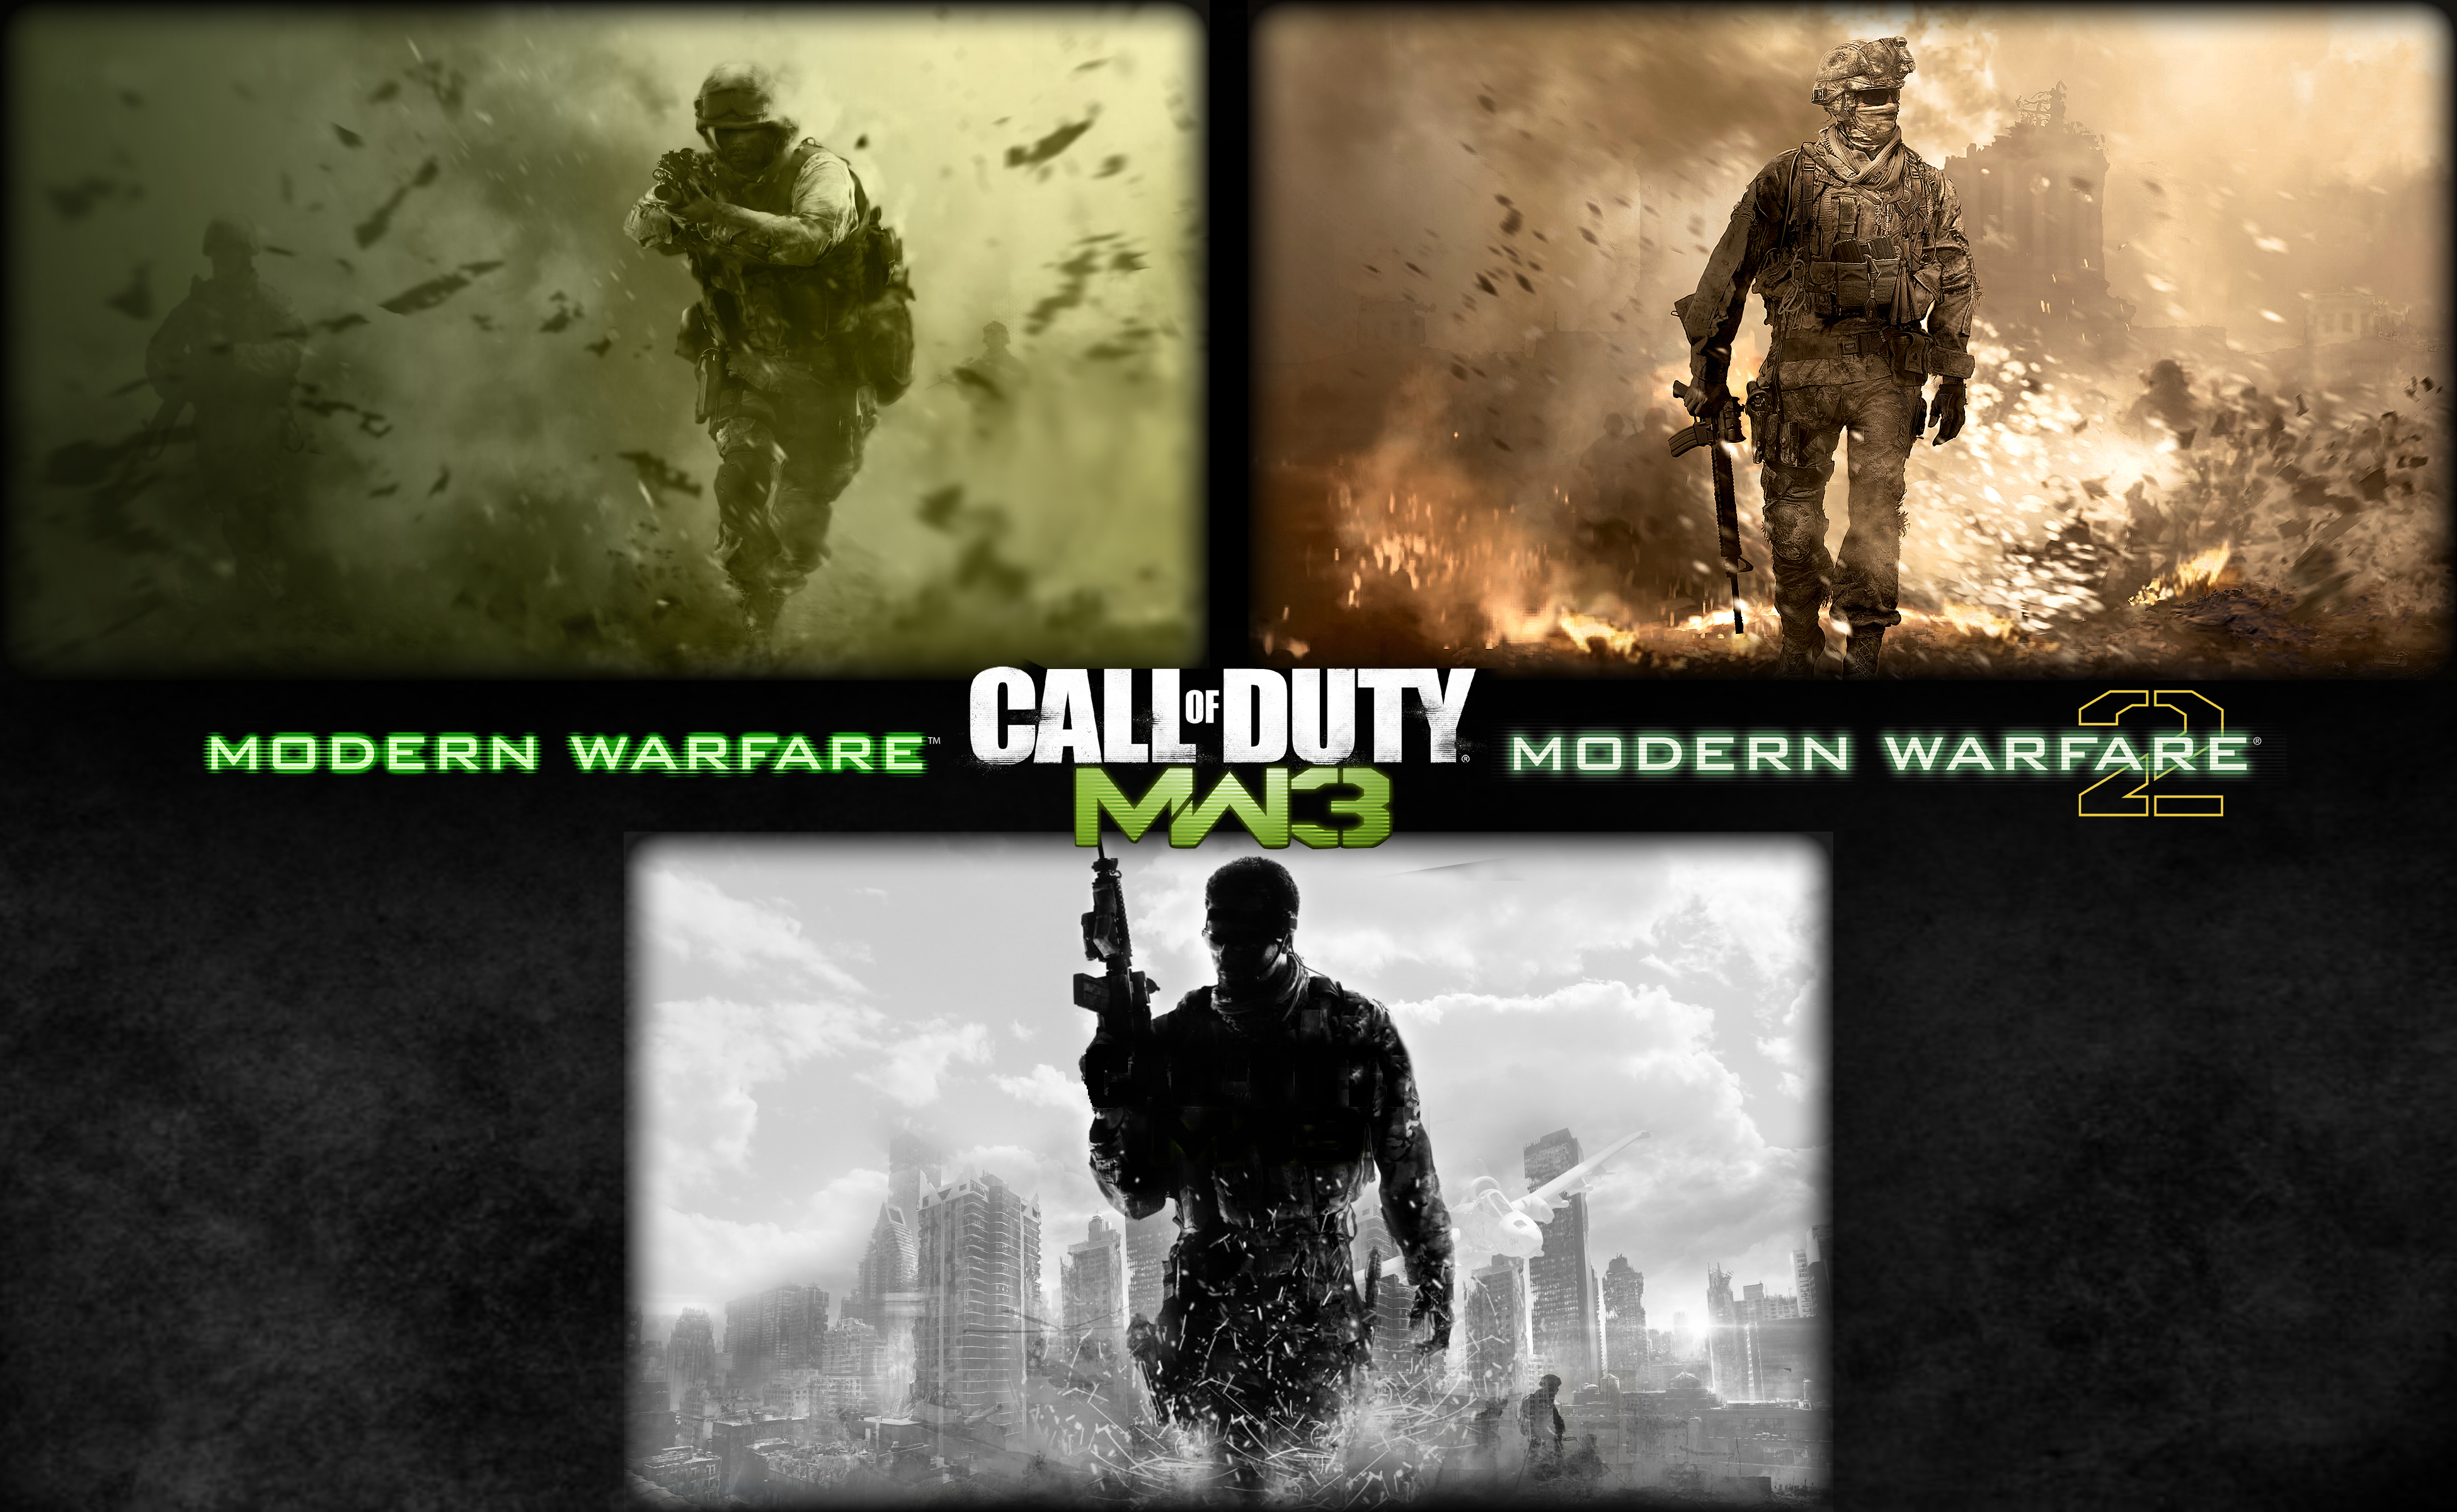 Call of Duty Modern Warfare Wallpaper by Wljump on DeviantArt